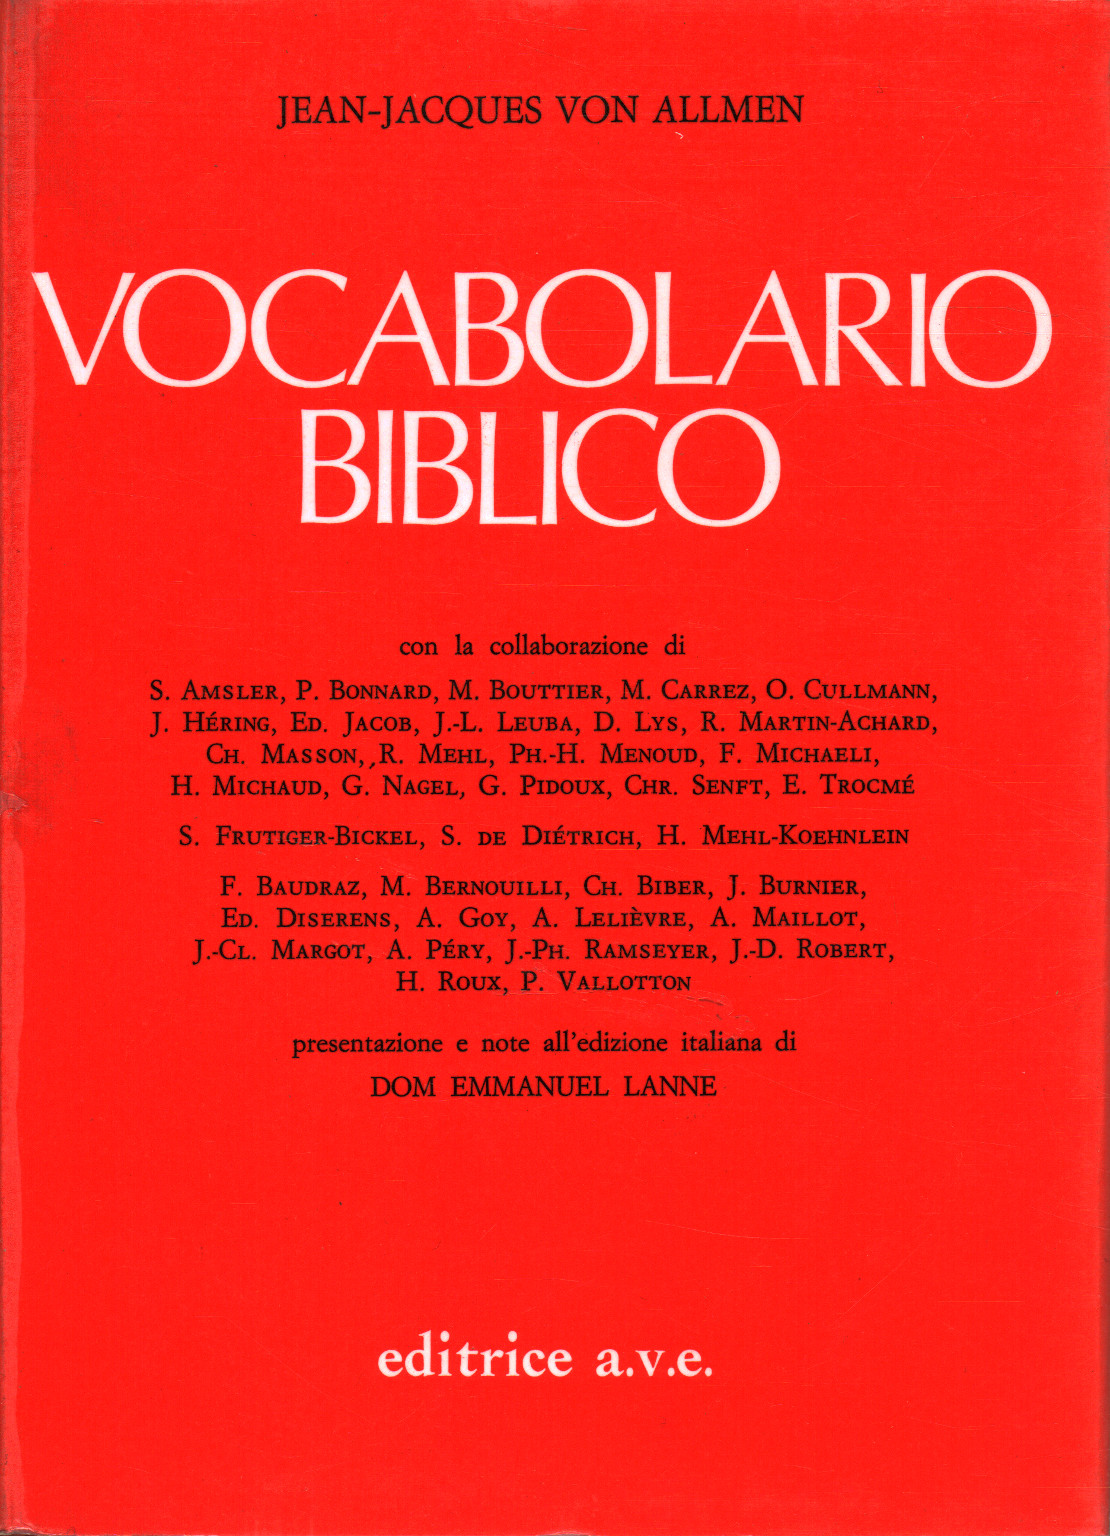 Vocabolario biblico, s.a.